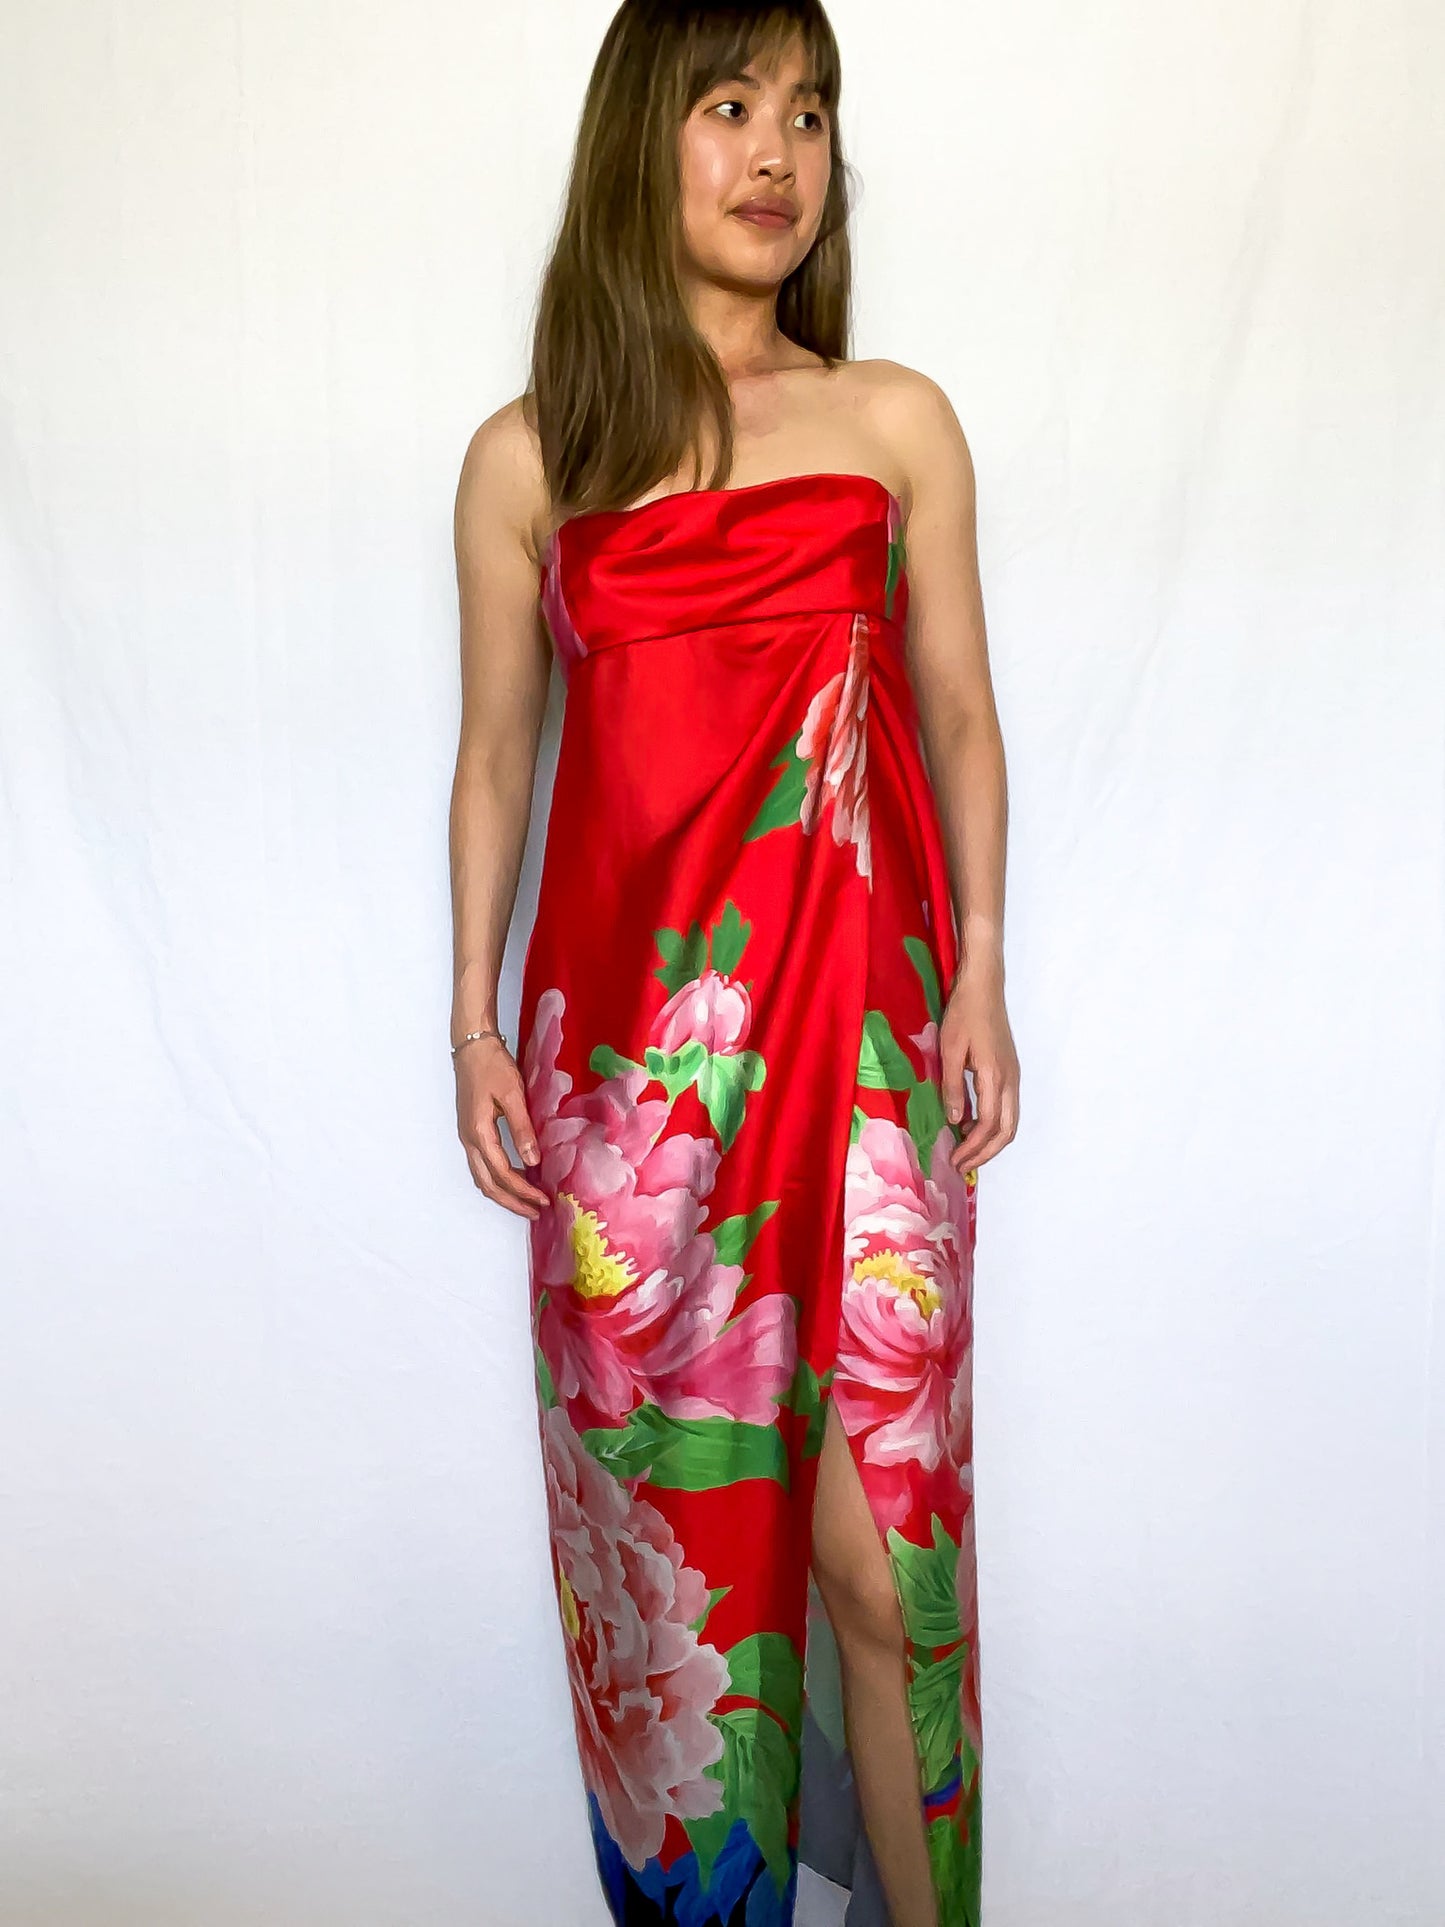 Zara Red Floral Print Strapless Dress Size M